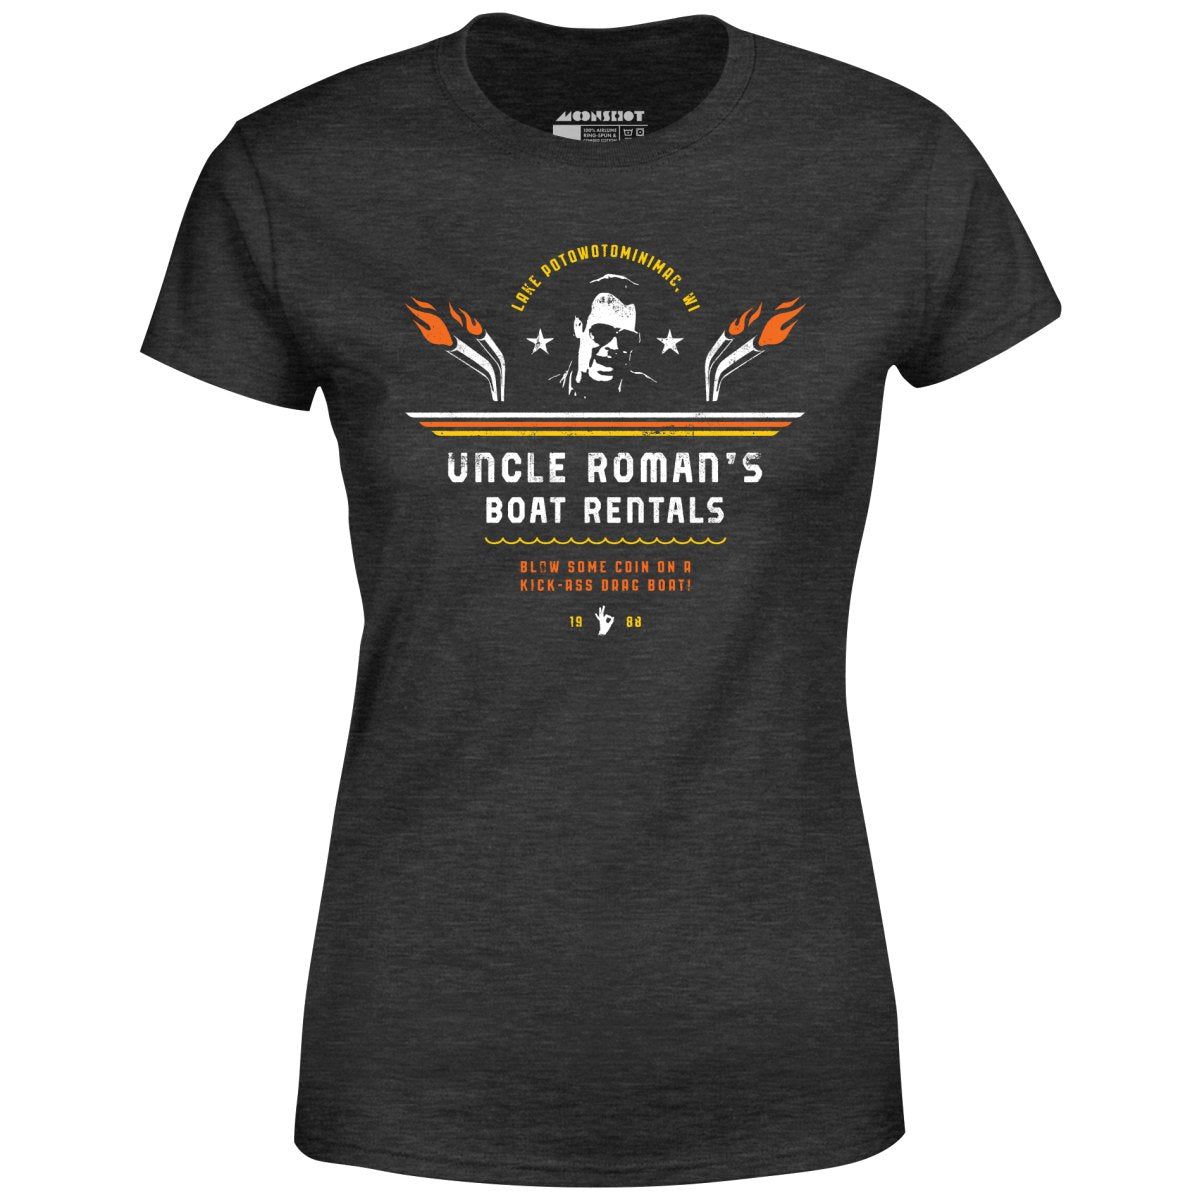 Uncle Roman's Boat Rentals - Women's T-Shirt